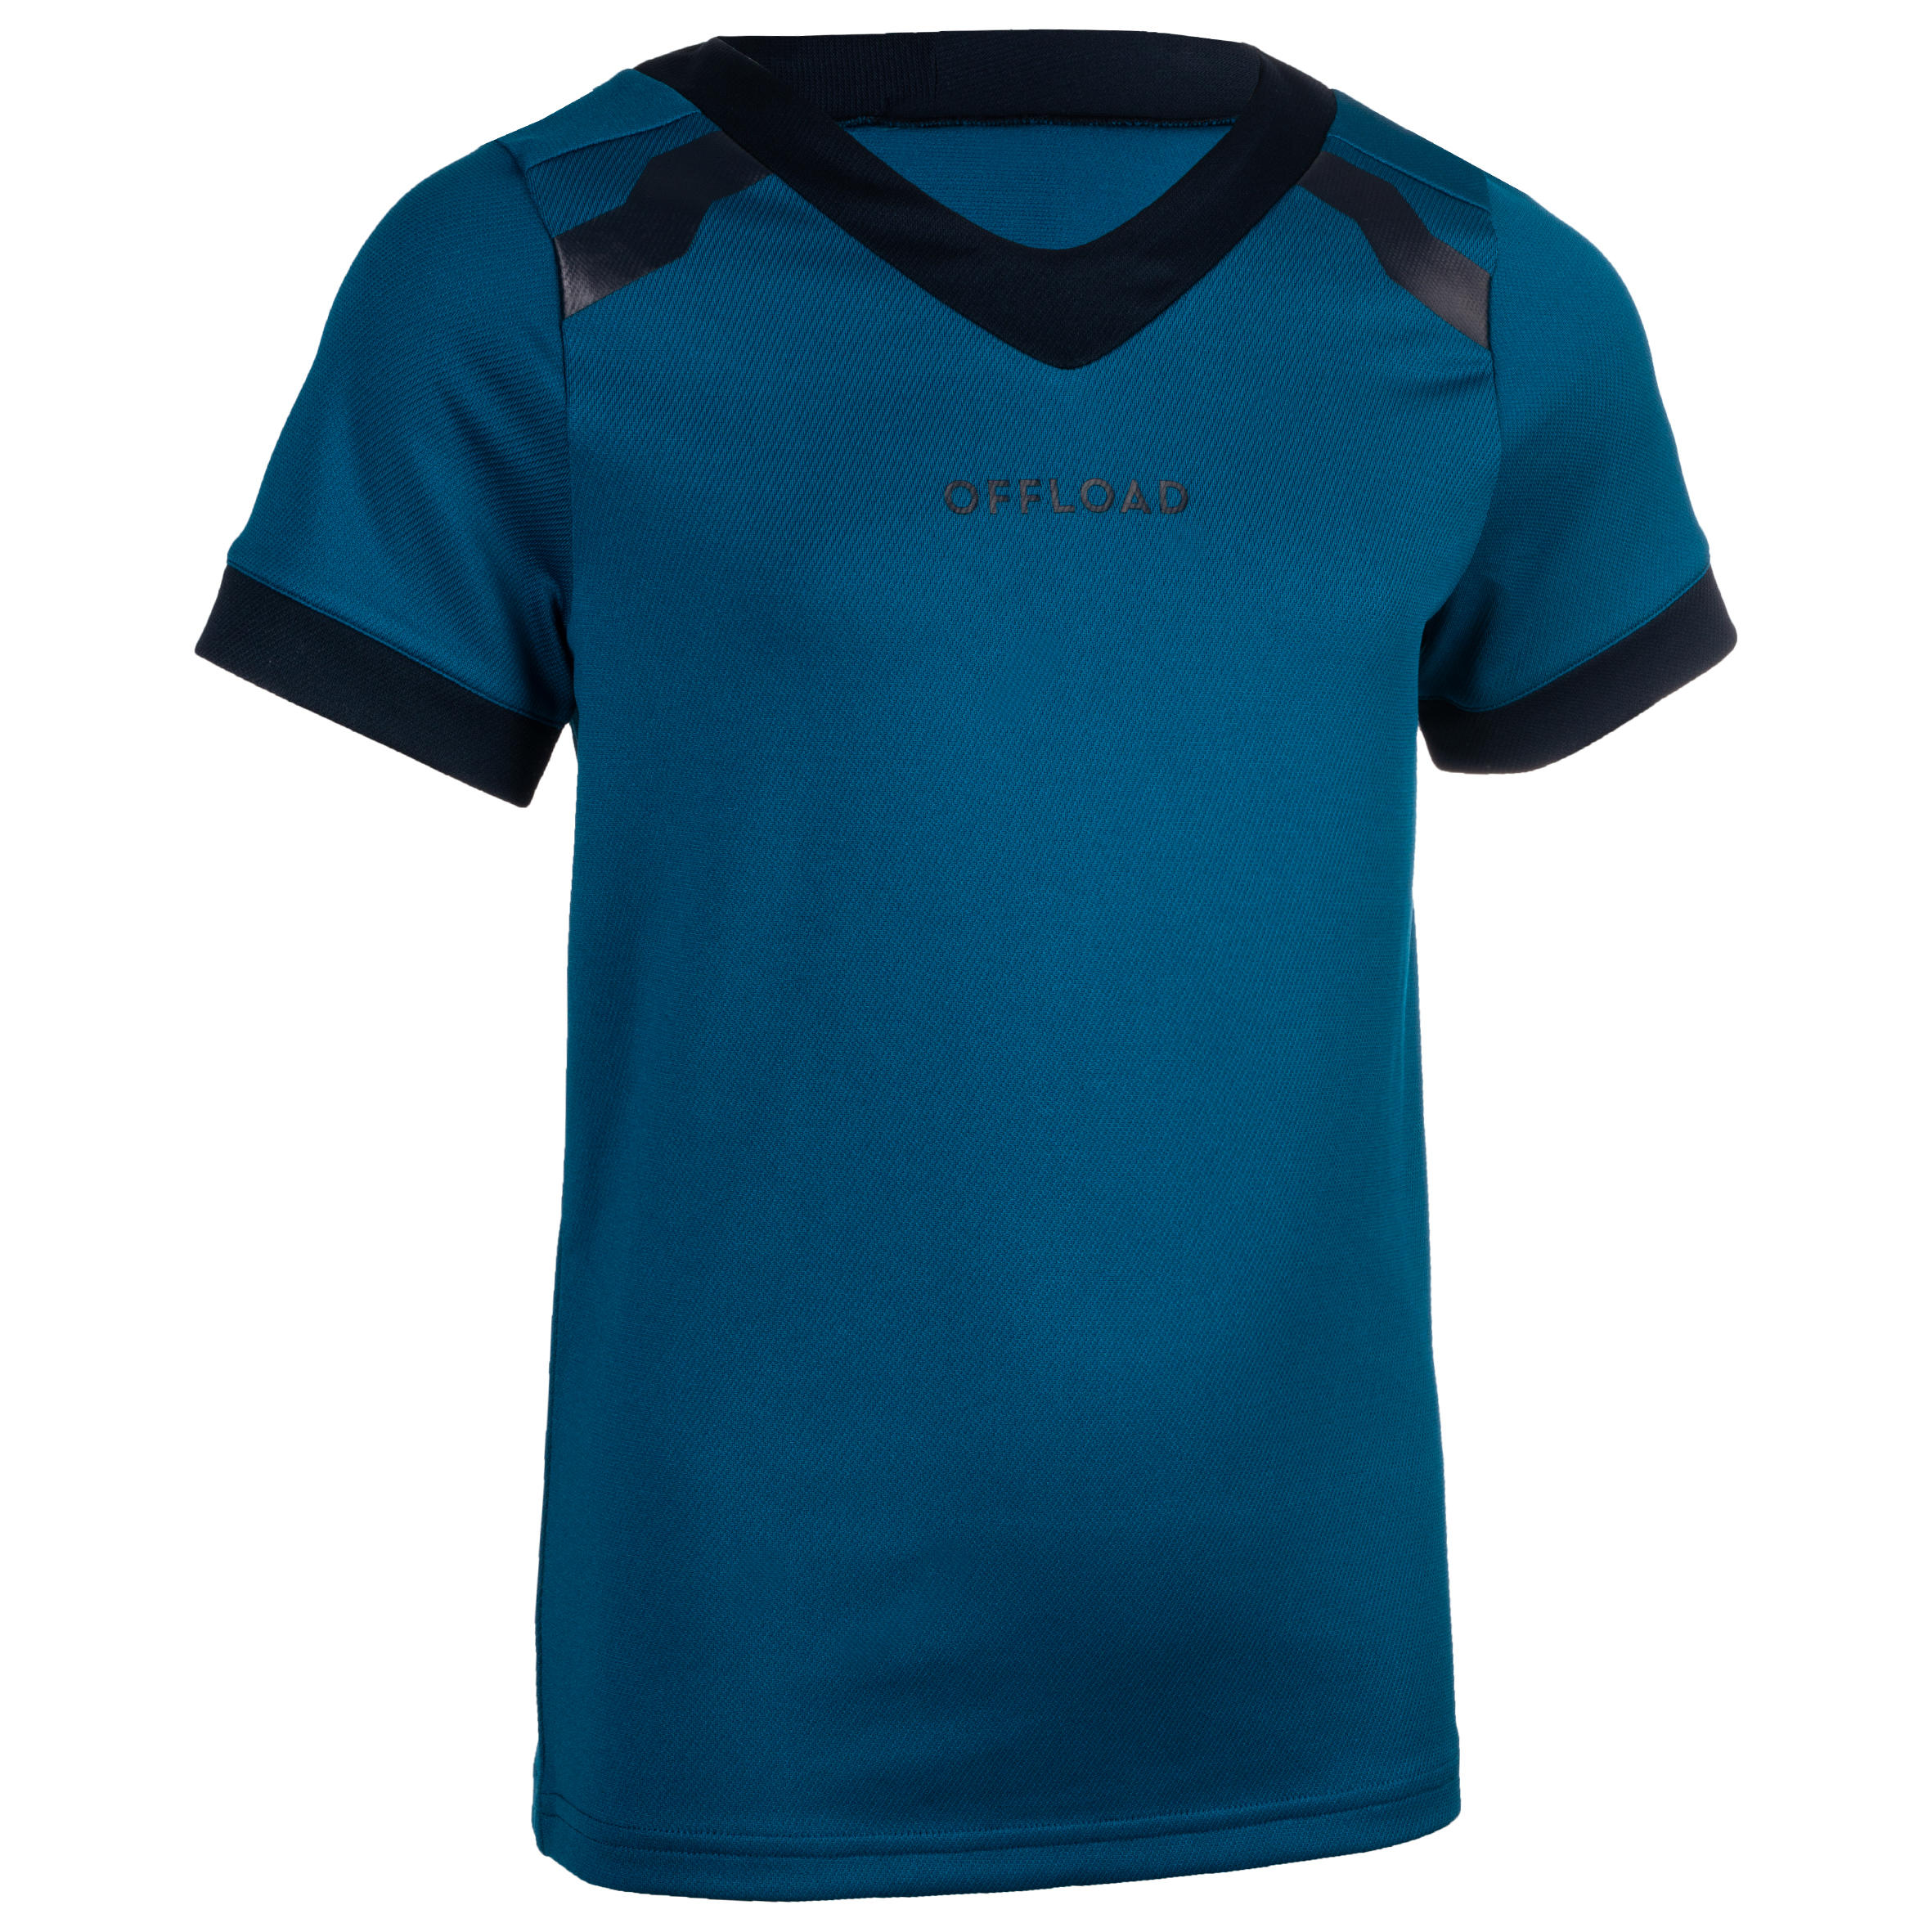 Kids' Rugby Shirt R100 - Blue - Decathlon